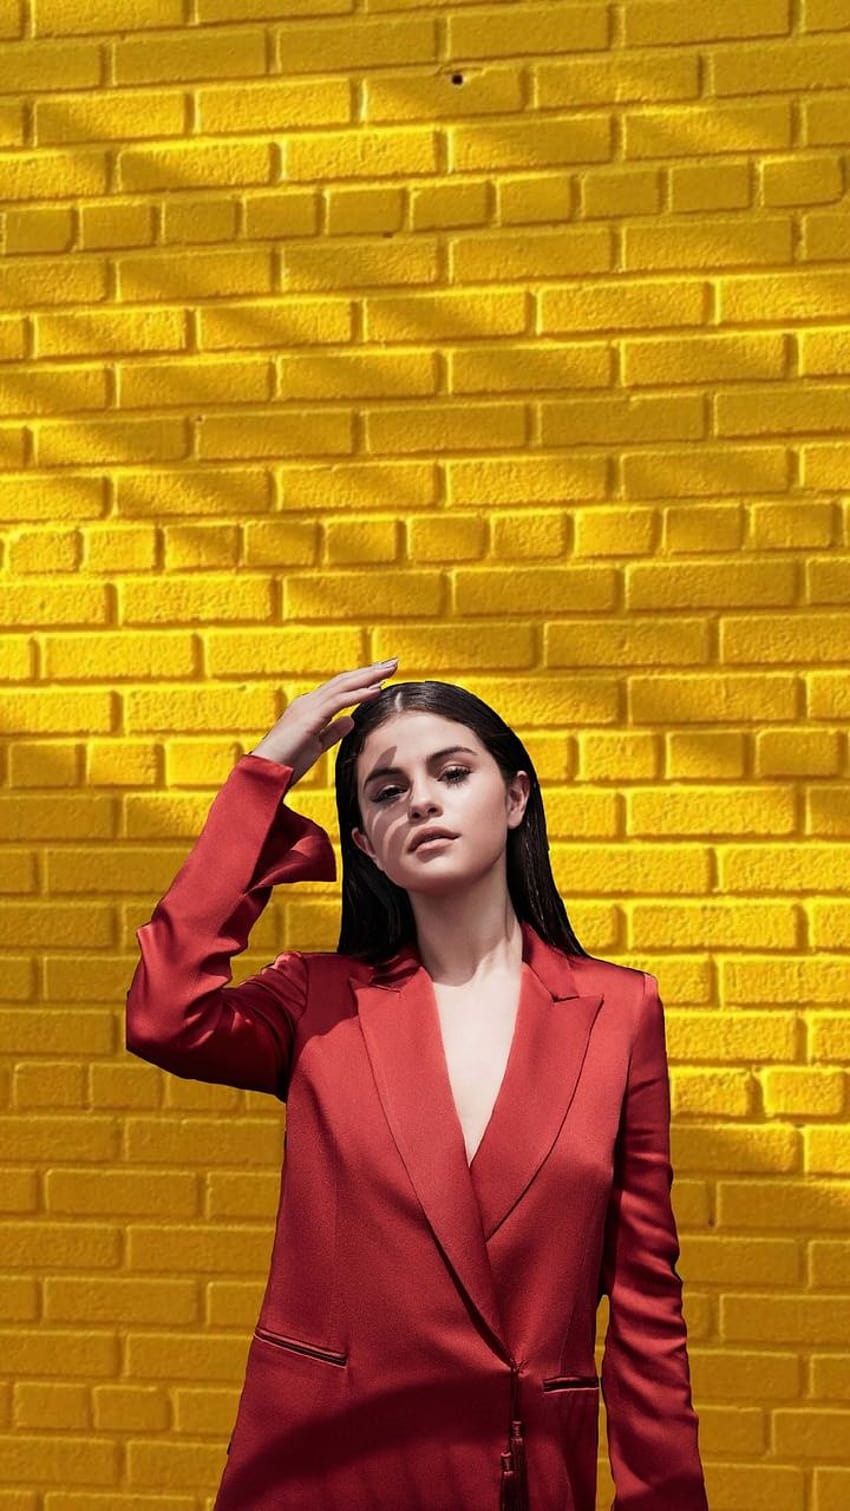 Selena Gomez Wallpaper